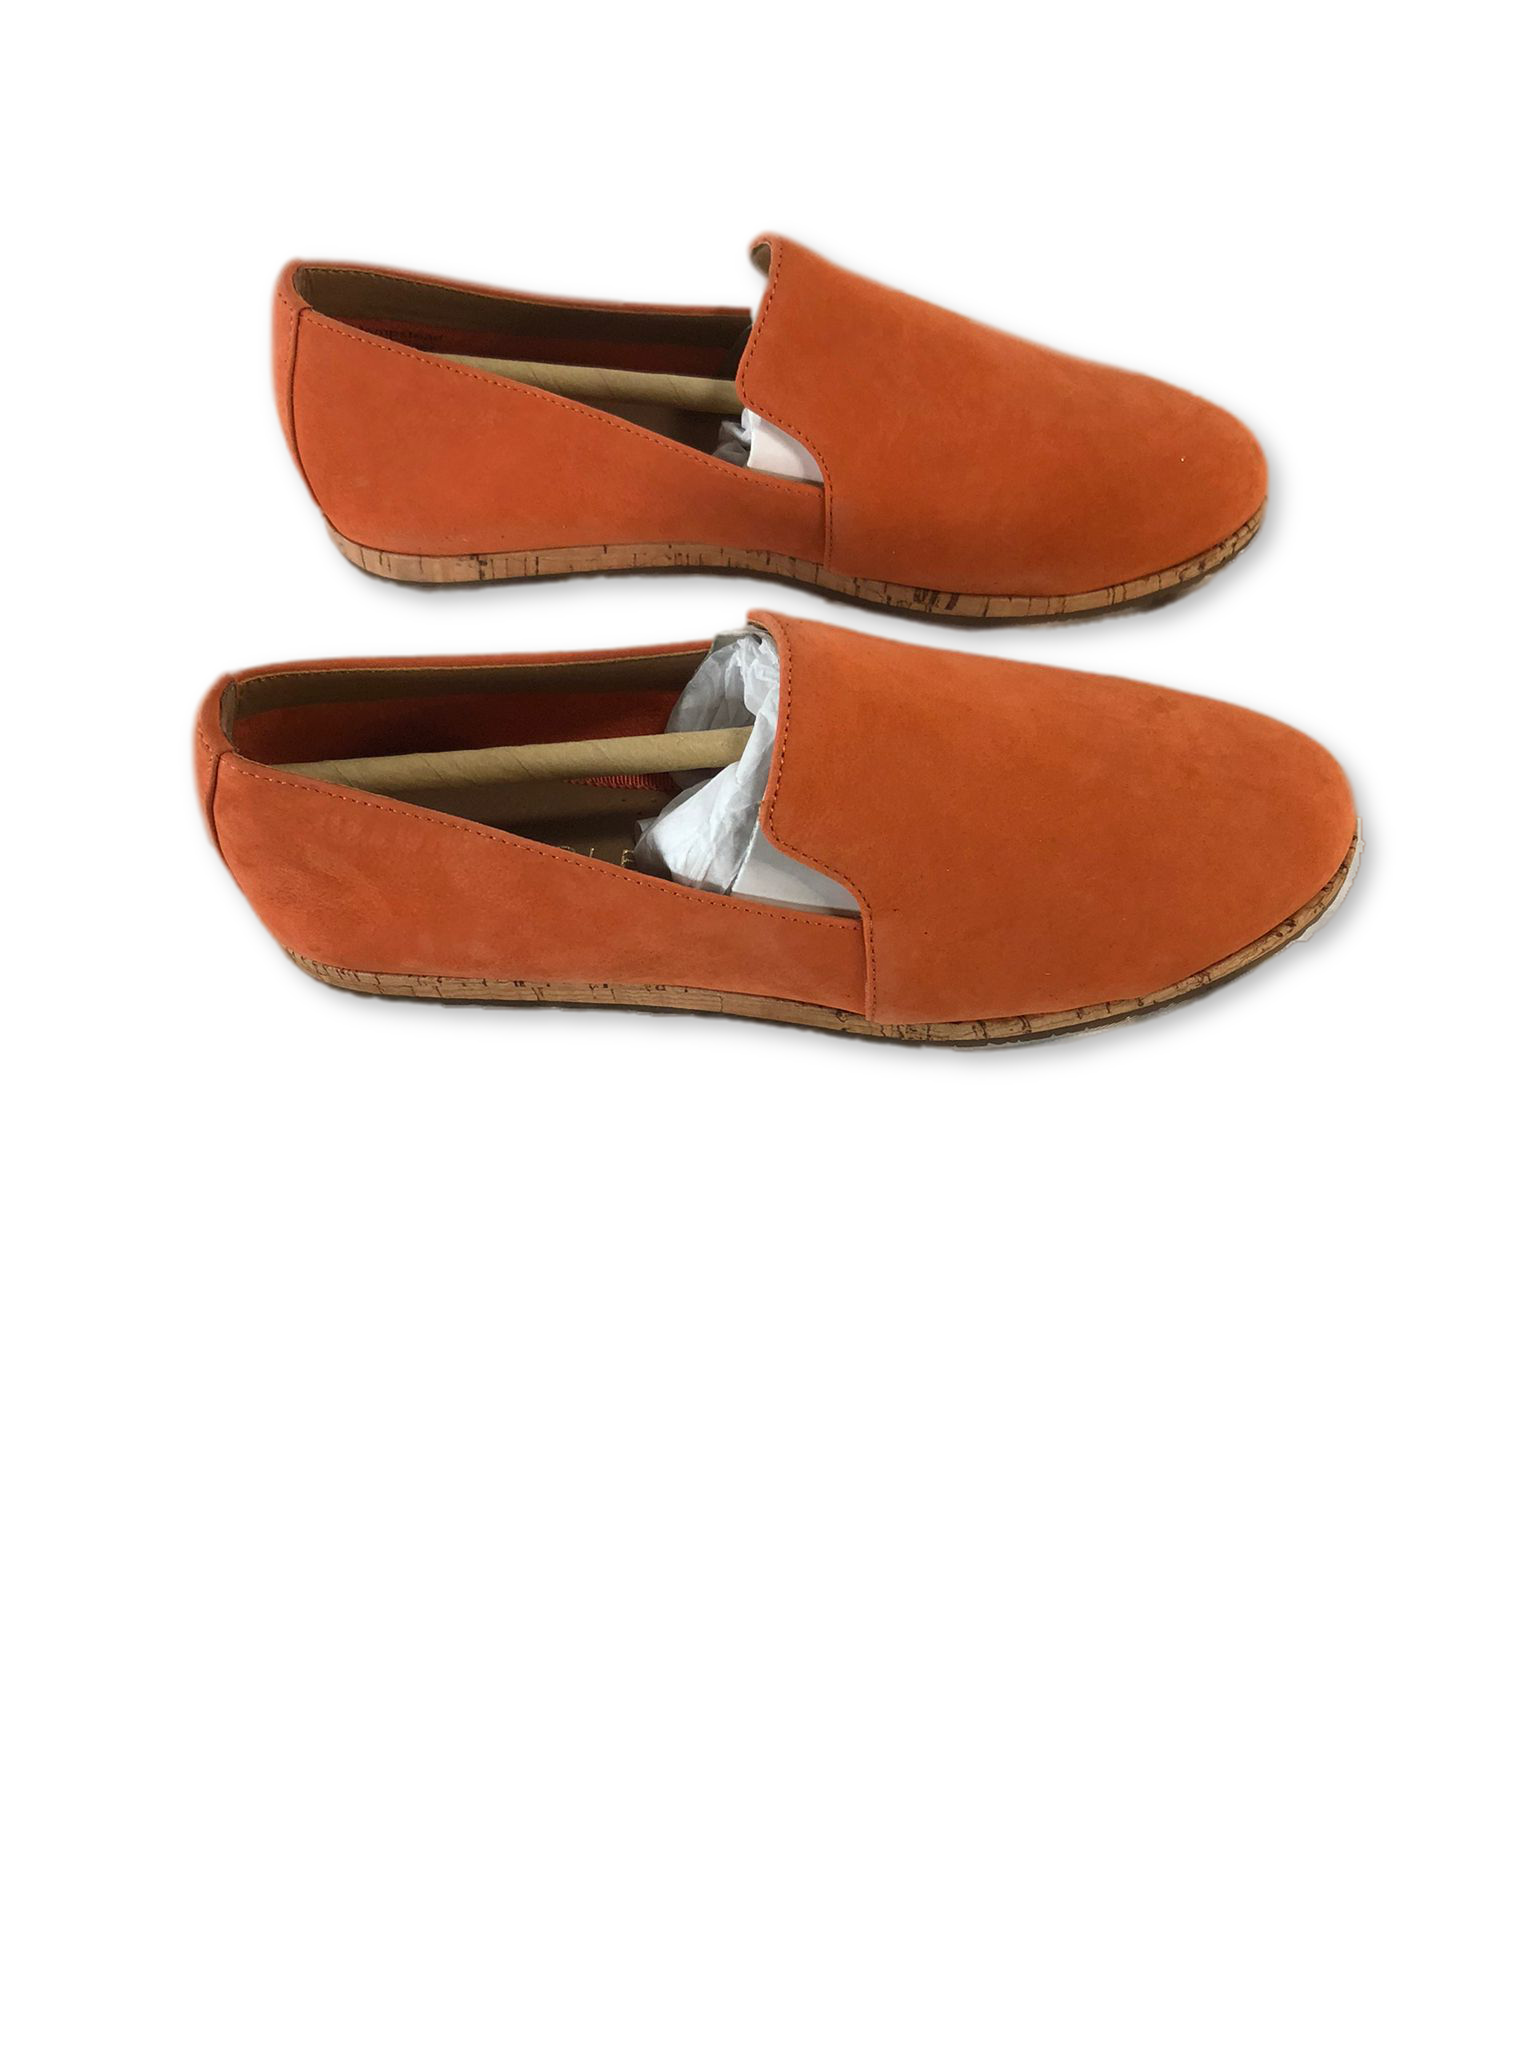 Men's Leather Slip-On Shoes - Comfortable, Stylish, Durable - Hempstead 5M